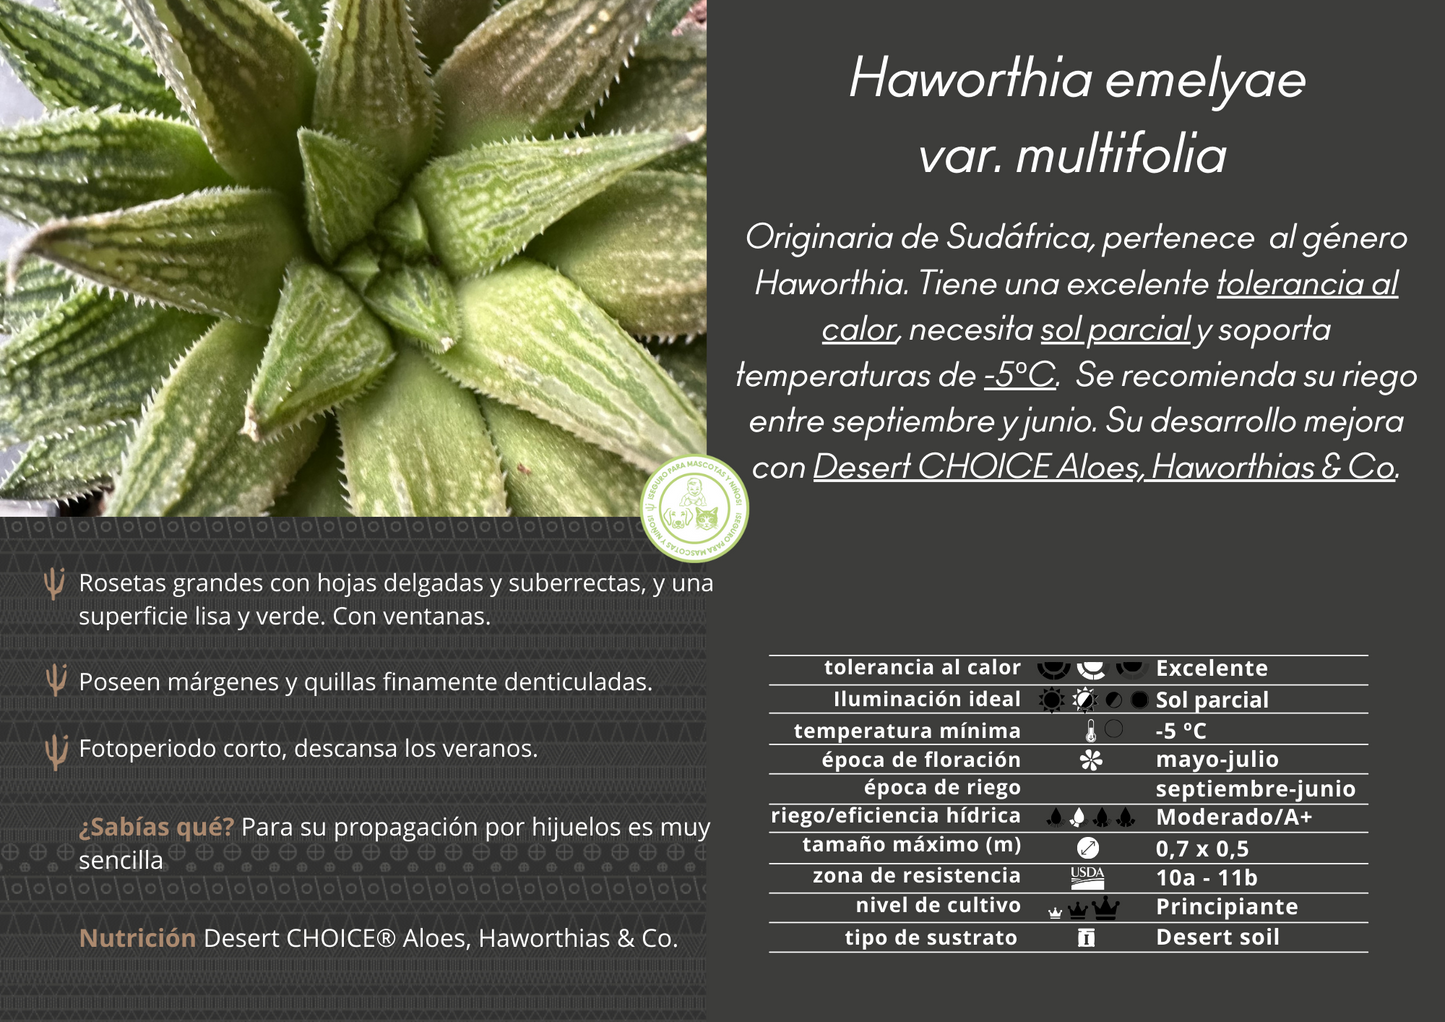 Haworthia emelyae var. Multifolia